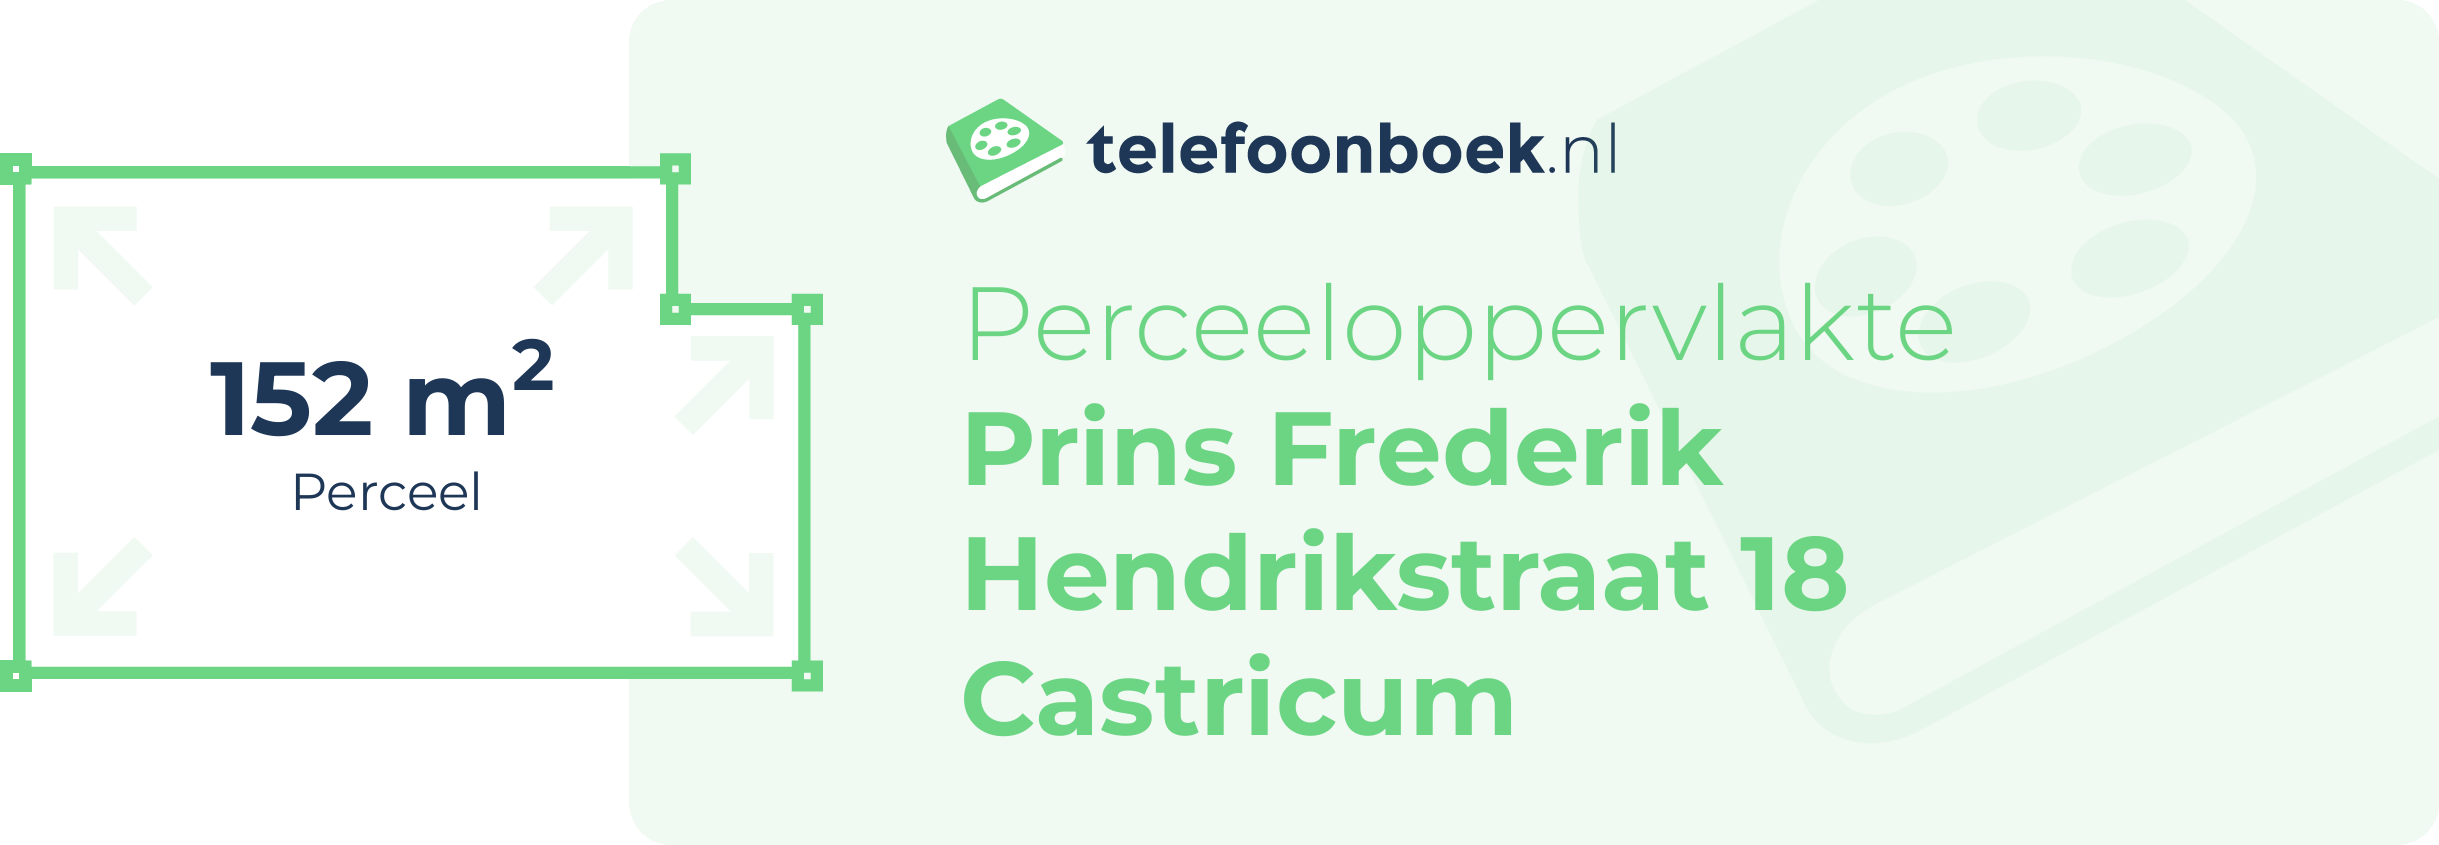 Perceeloppervlakte Prins Frederik Hendrikstraat 18 Castricum